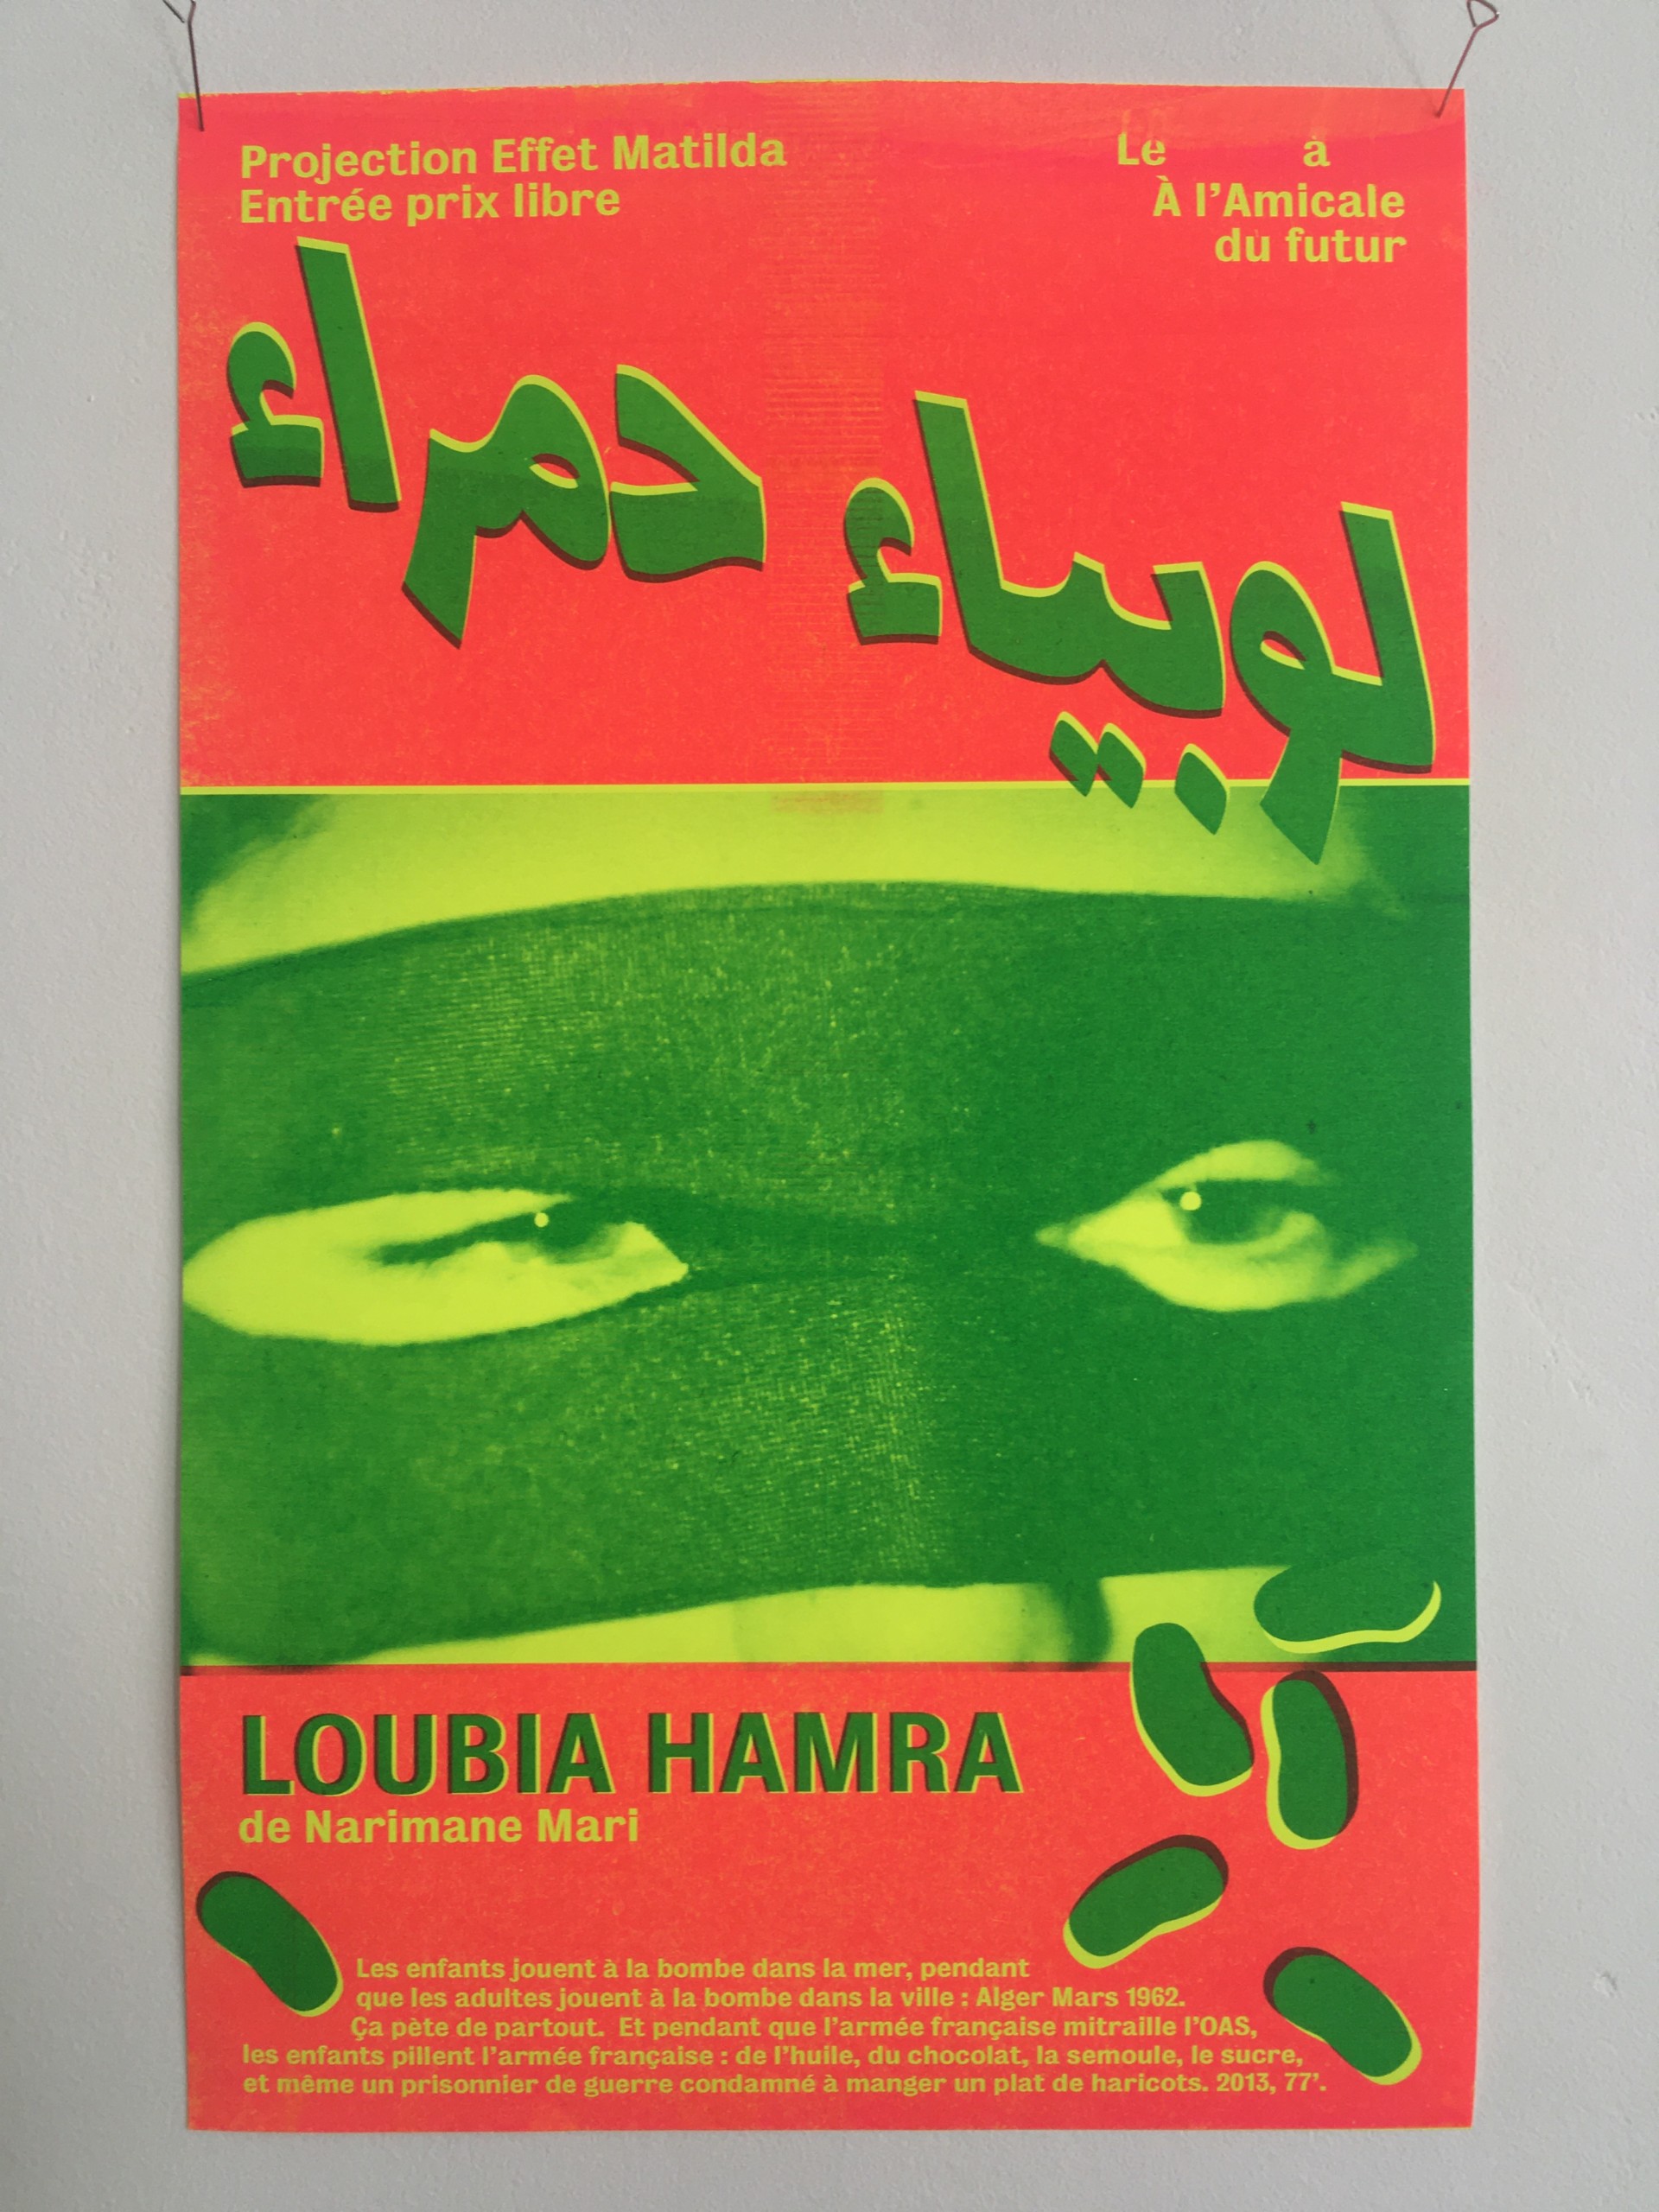 L'Amicale du Futur, 31 rue Sébastien Gryphe Lyon 7e MAR 24/05 – 18h00 – EFFET MATILDA présente « LOUBIA HAMRA » de NARIMANE MARI